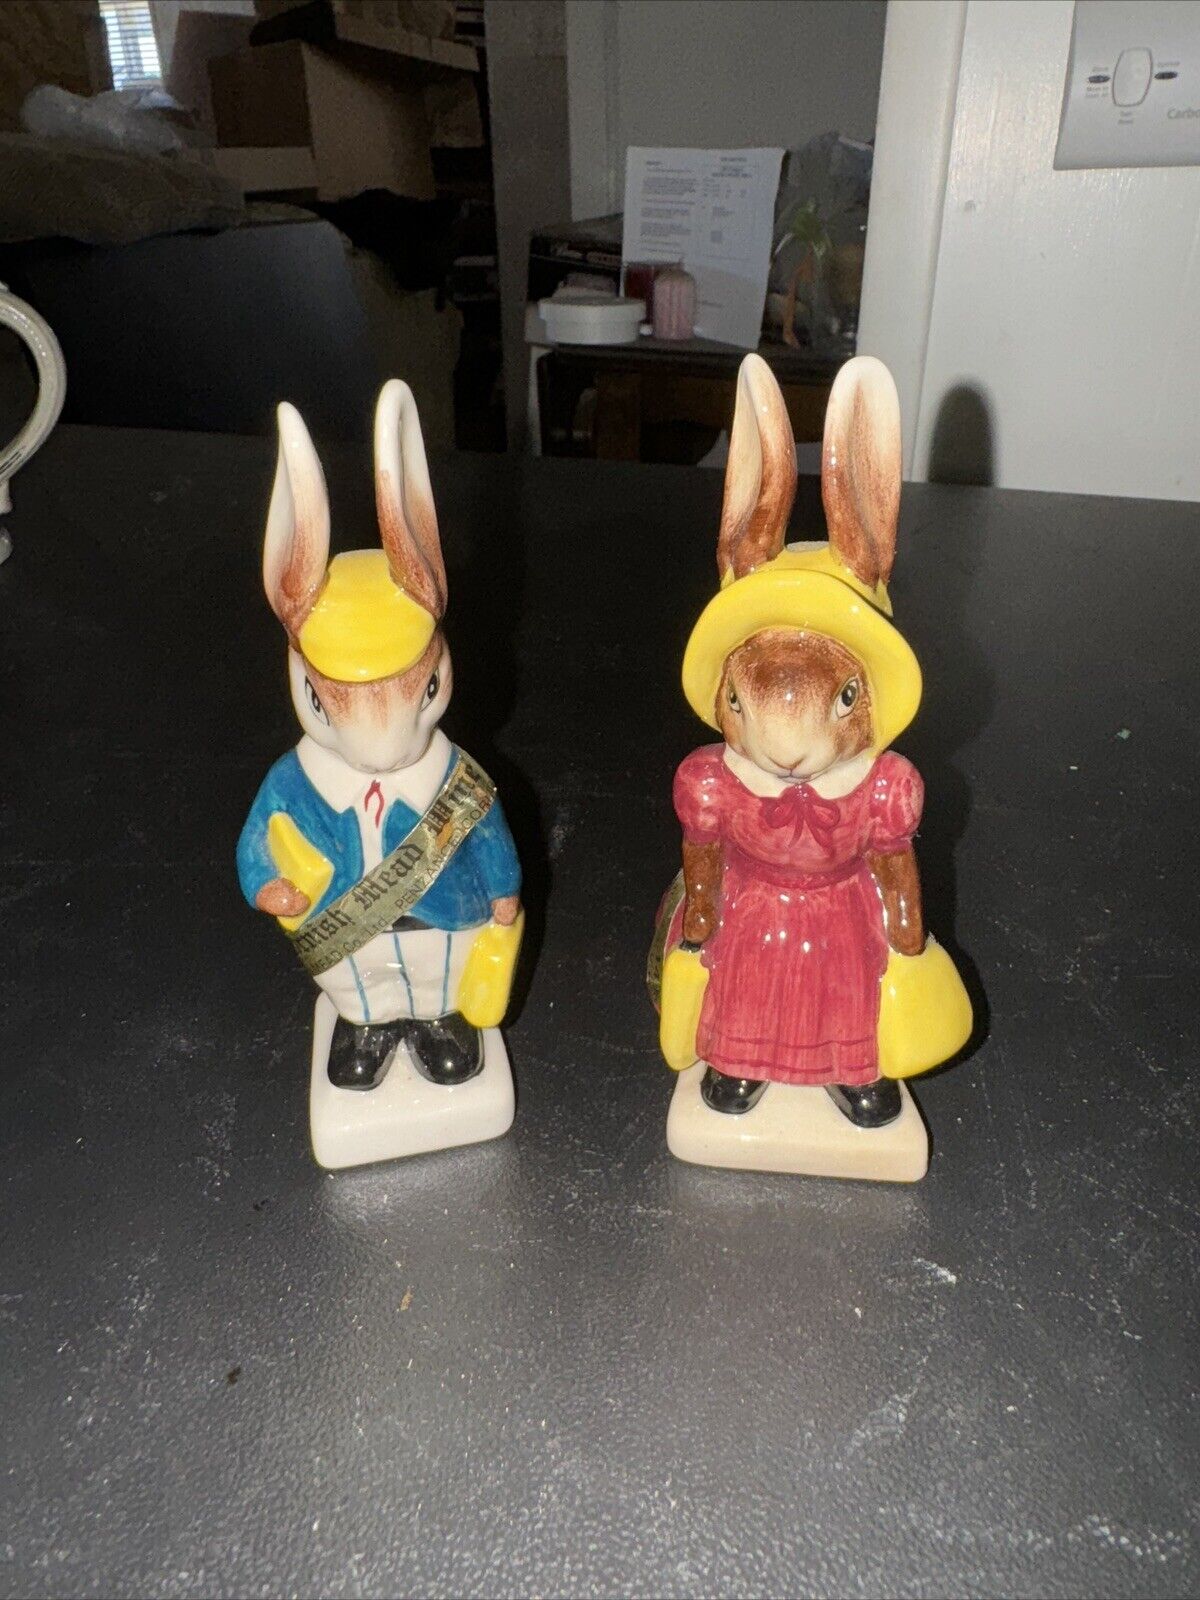 Bunny Rabbit School Boy and Girl Figurines from Artone, England Collectible MCM